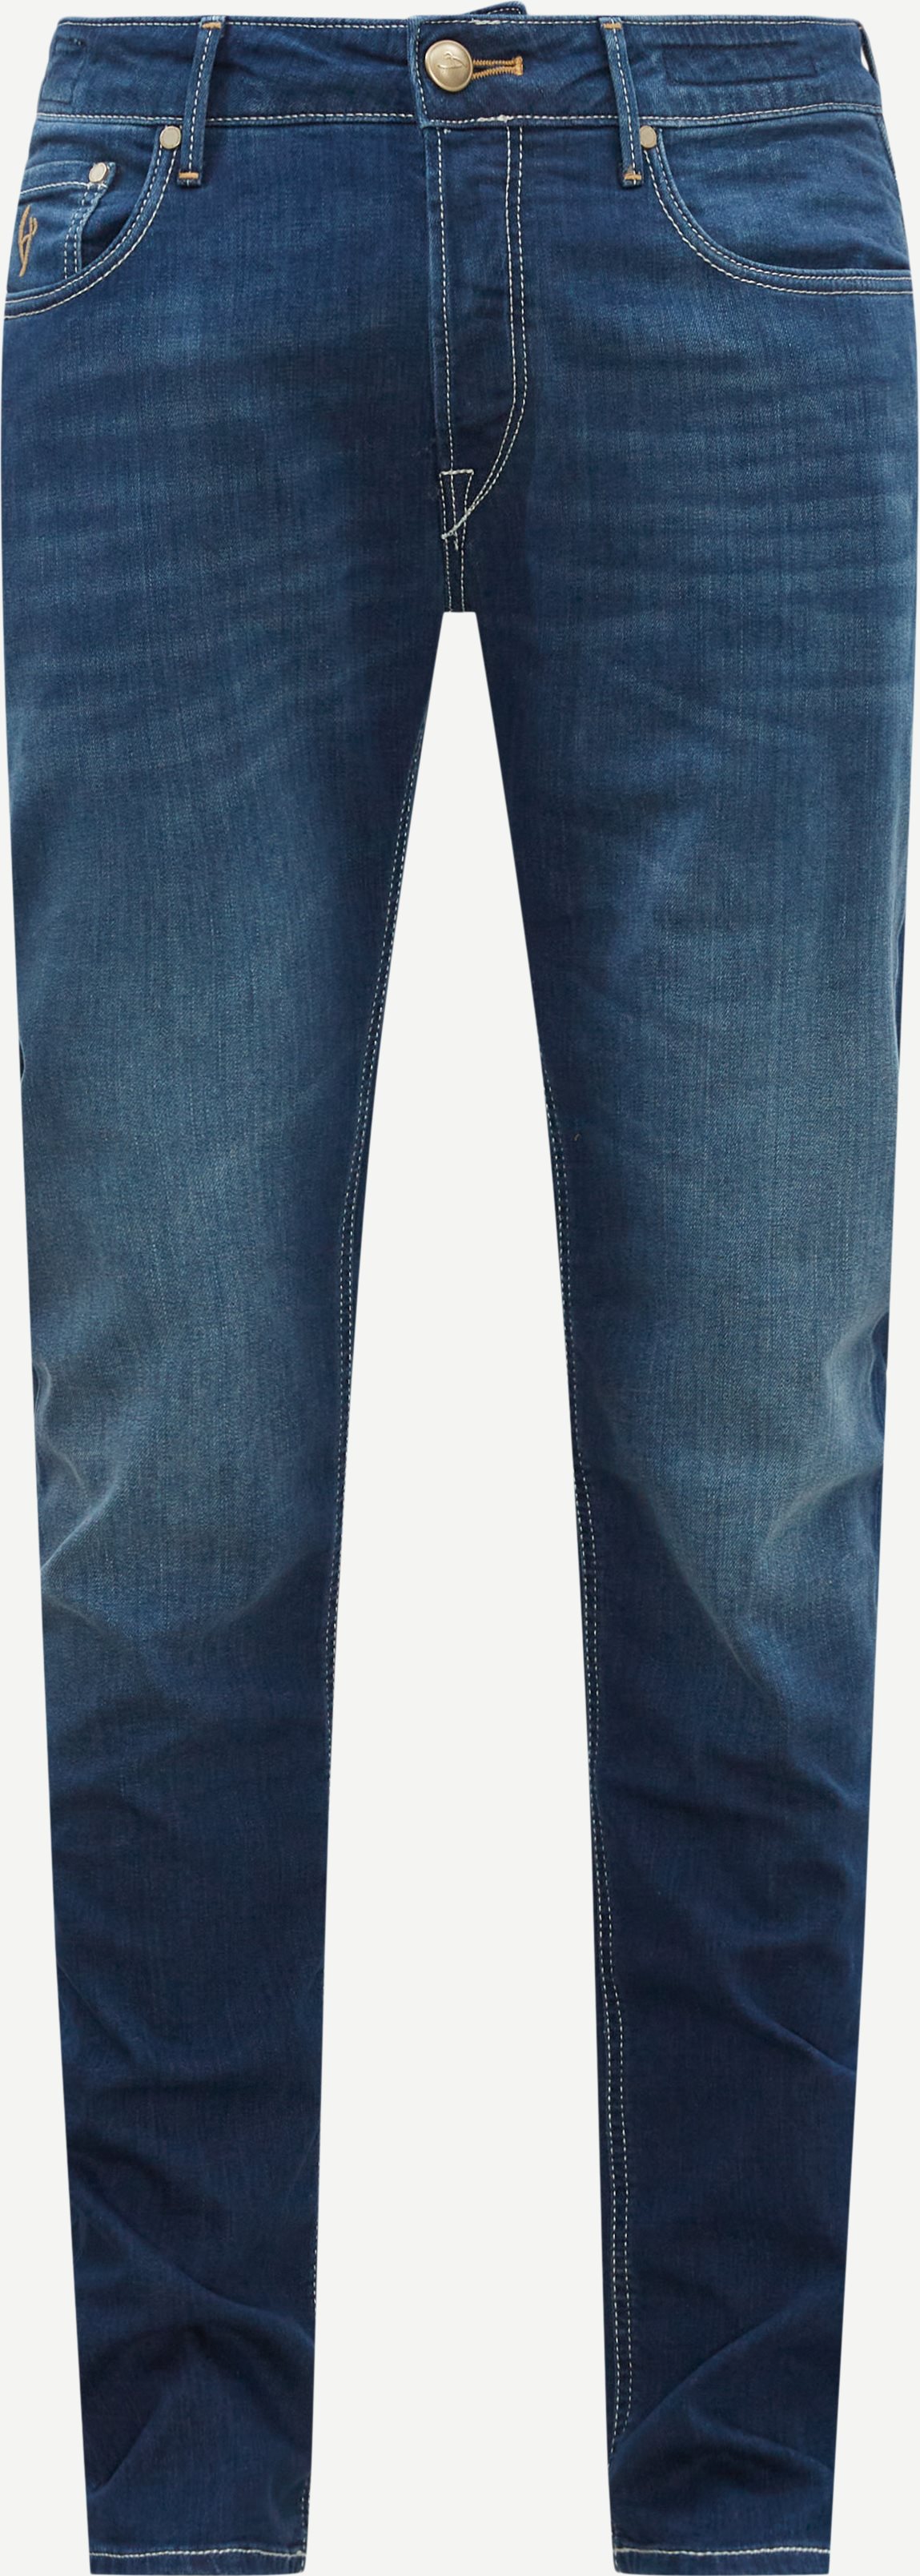 Handpicked Jeans 2842 002 RAVELLO Denim